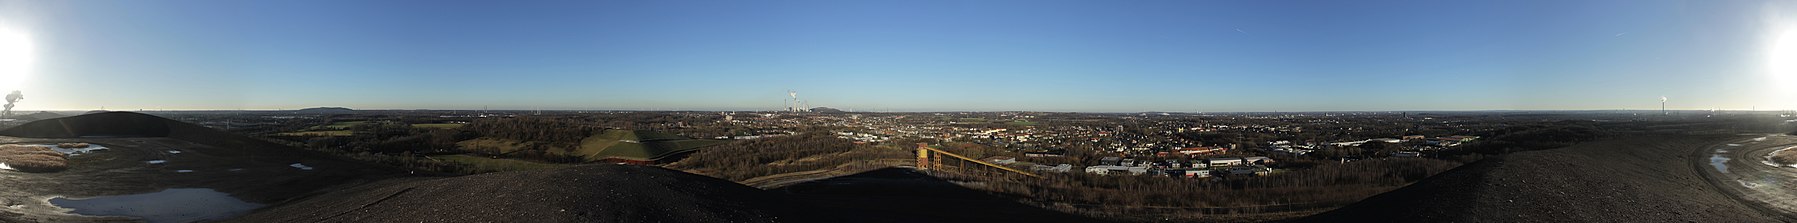 Panoramic view from Mottbruchhalde (32003822620).jpg